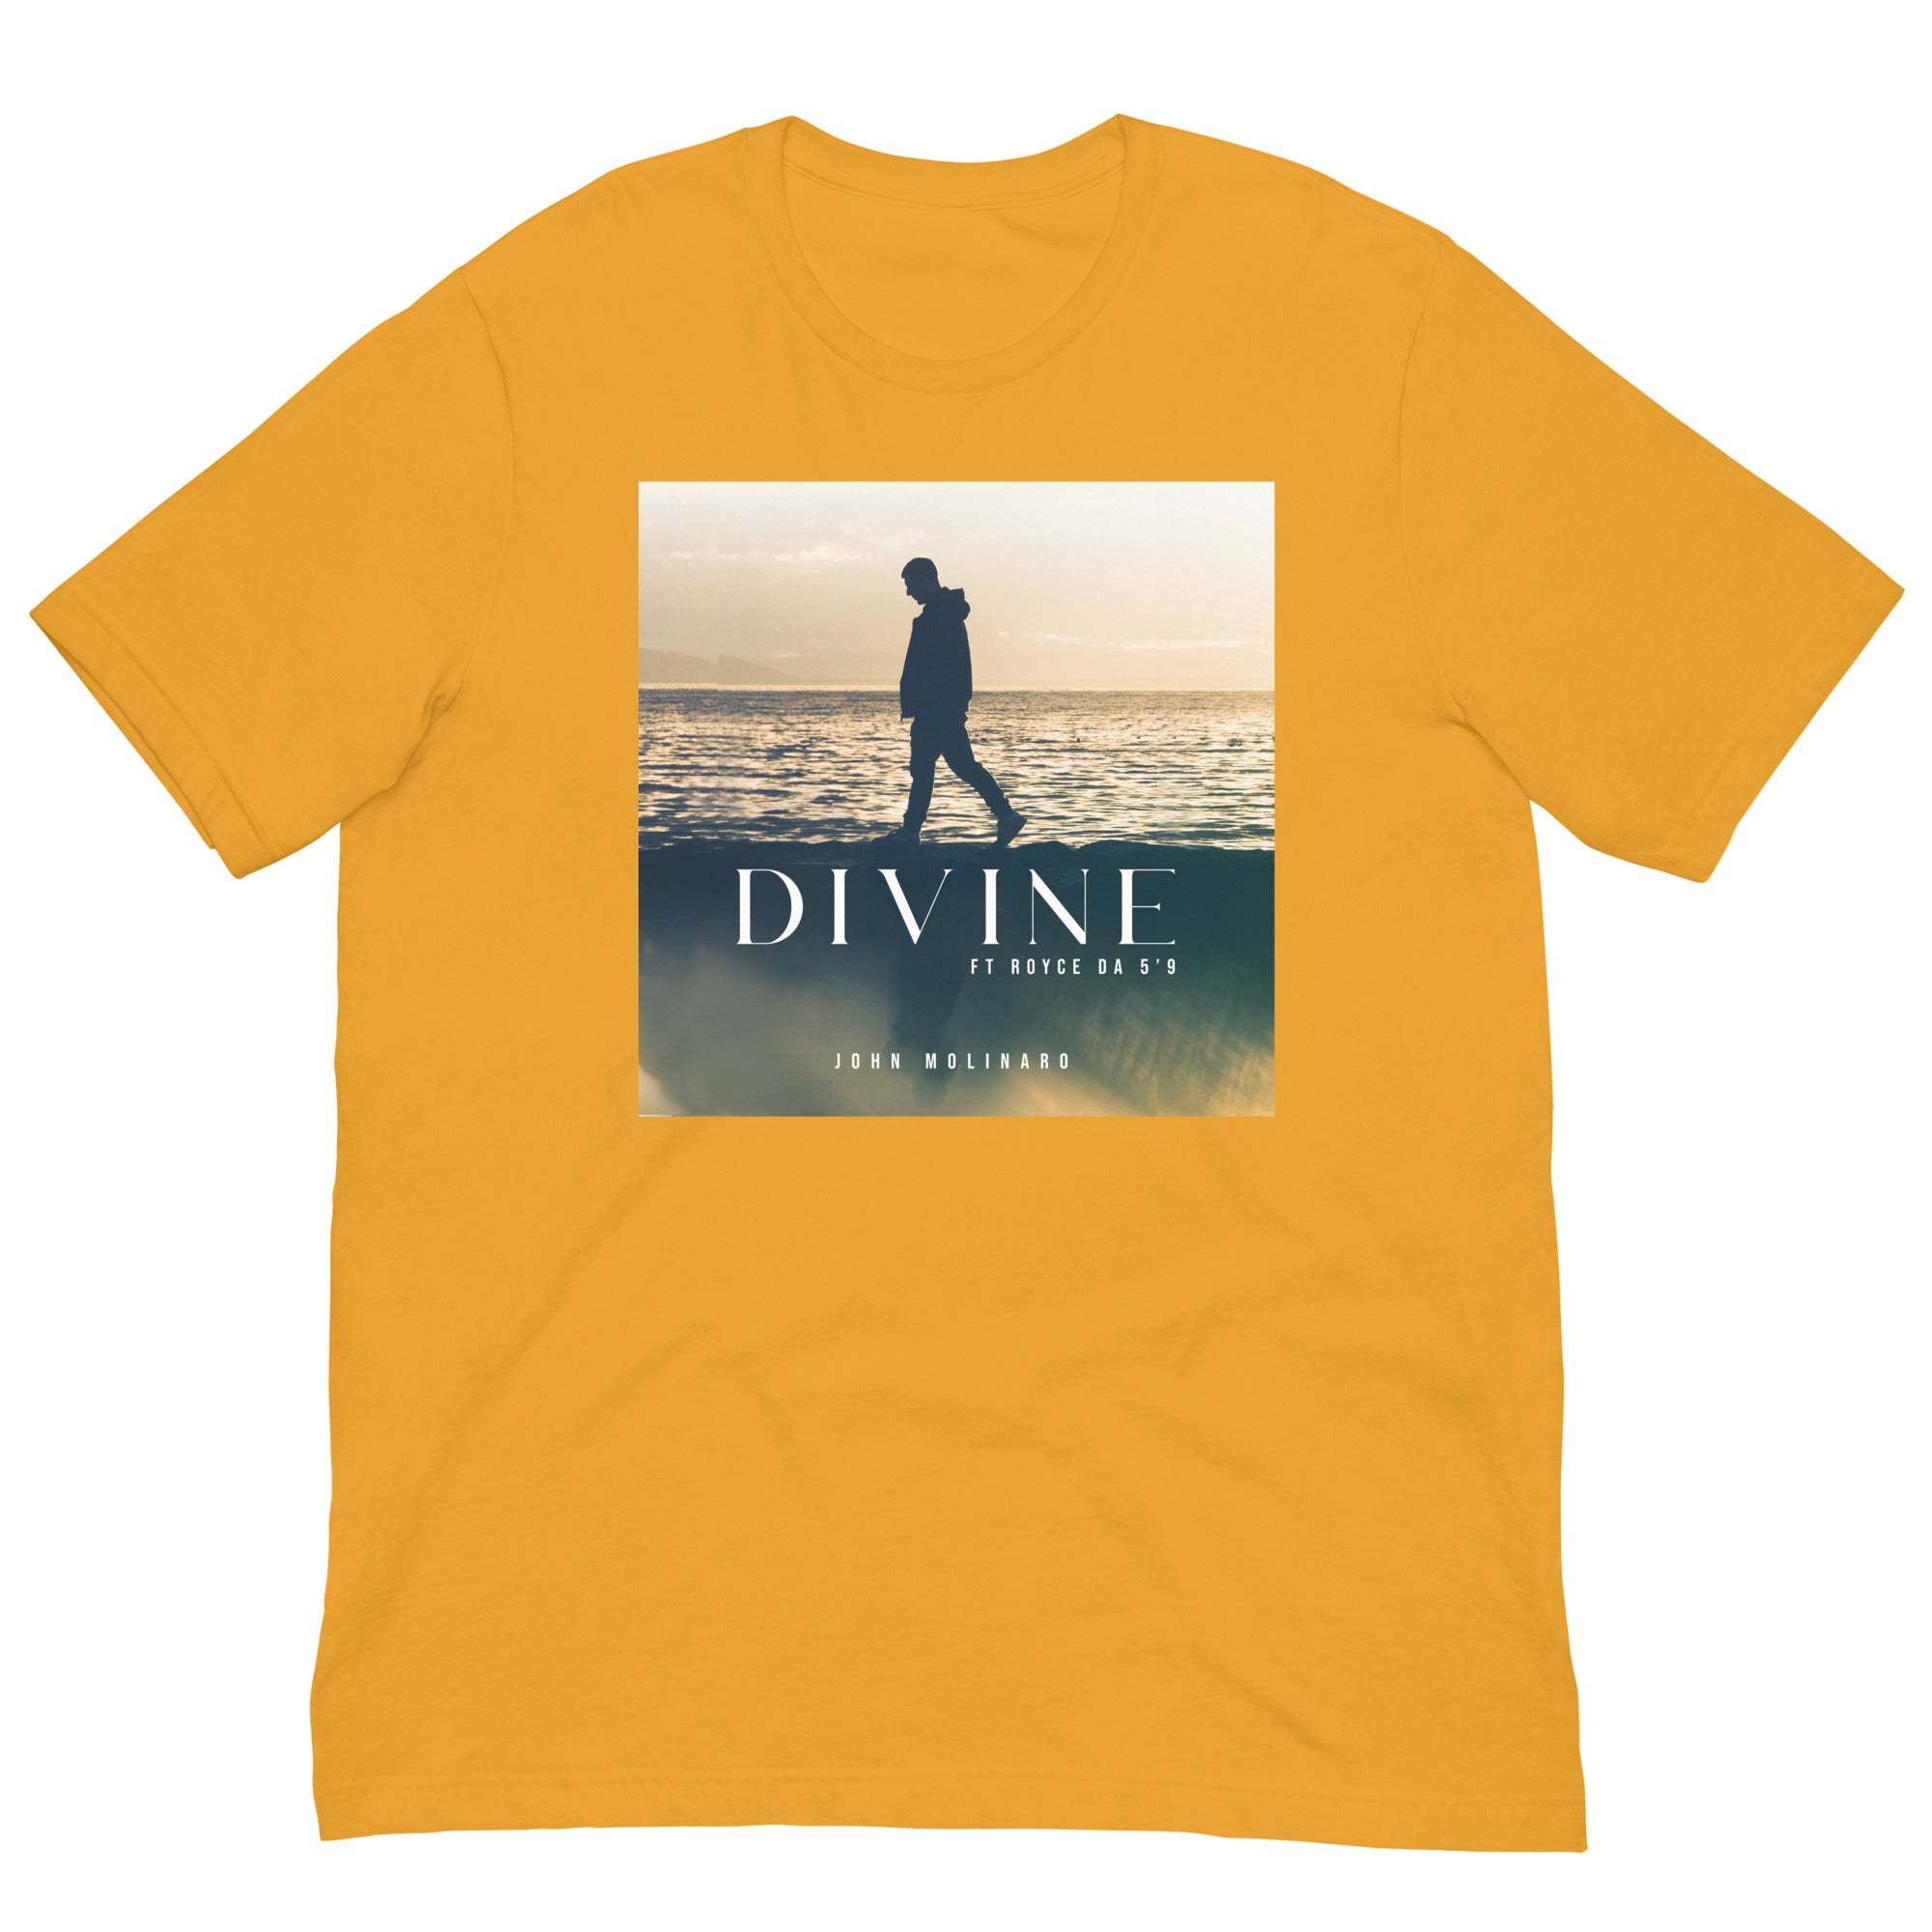 John Molinaro - "Divine" - t-shirt